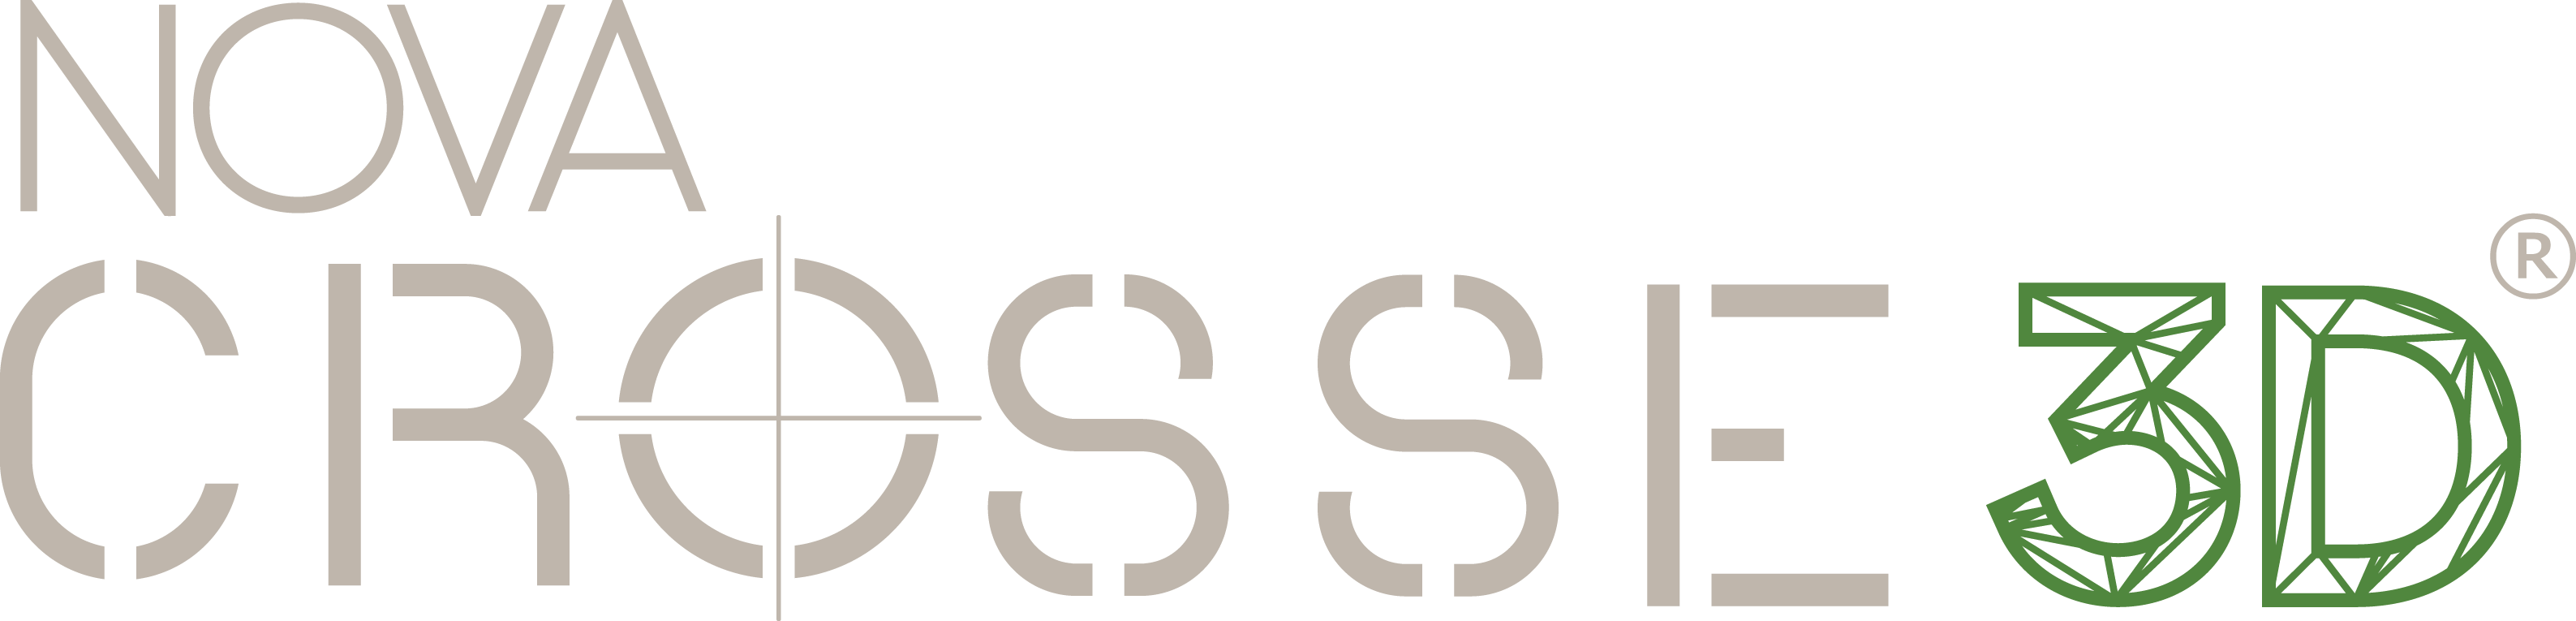 Logo Nova Crosse 3D